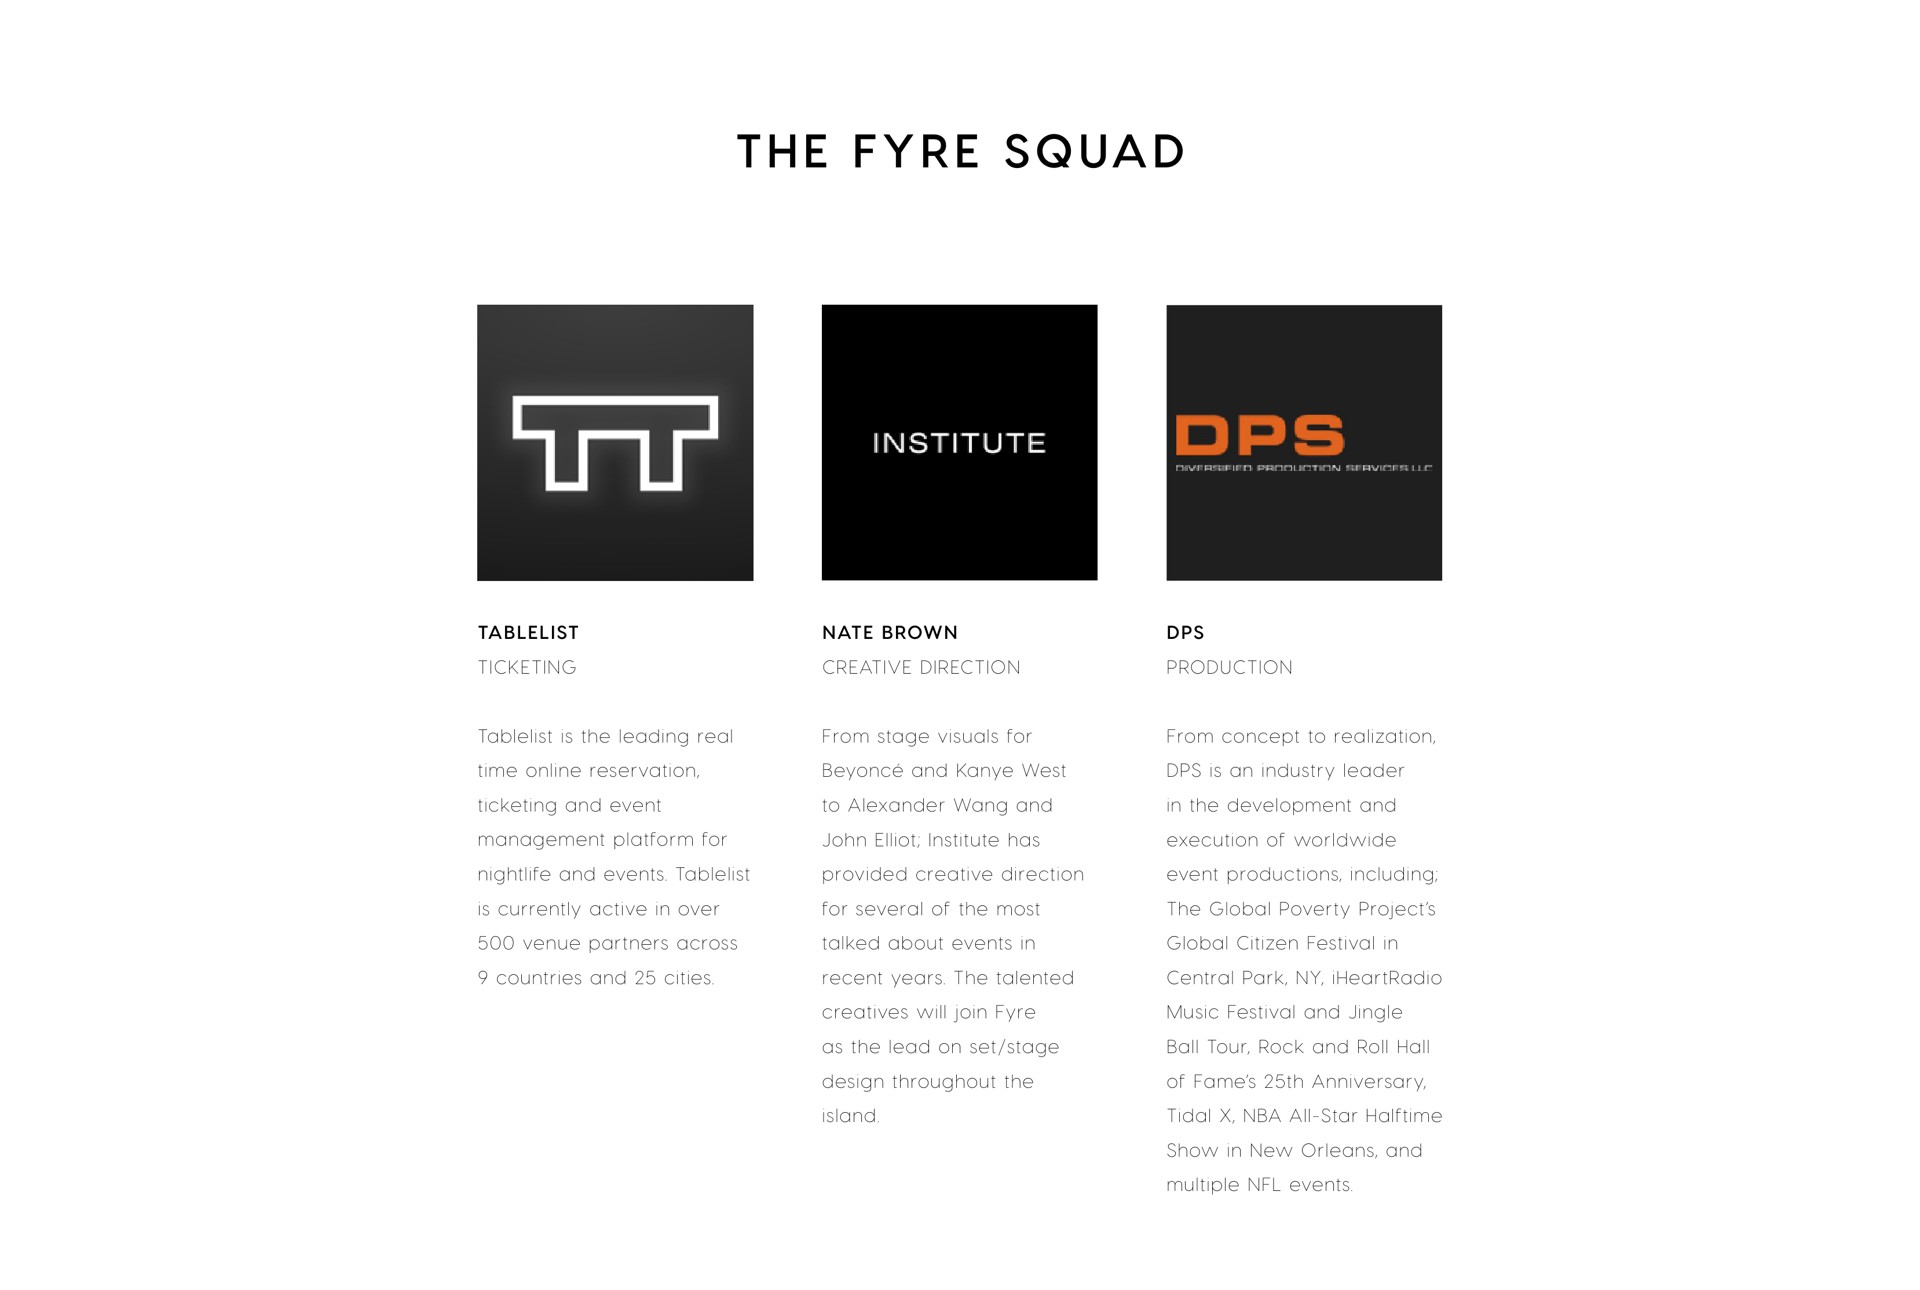 the squad | Fyre